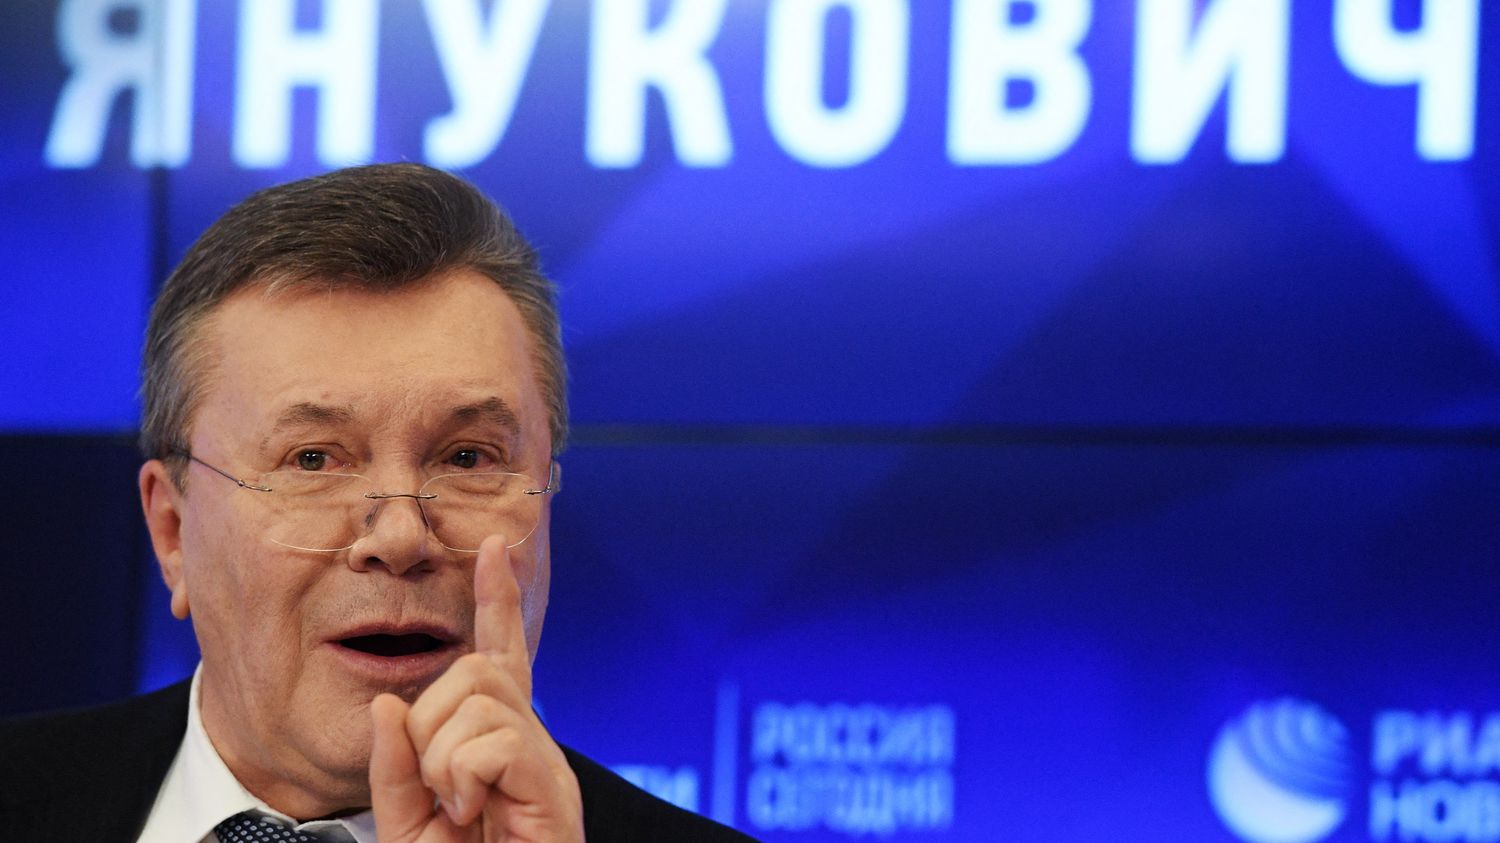 War in Ukraine: Former Ukrainian President Viktor Yanukovych in turn targeted by European sanctions
